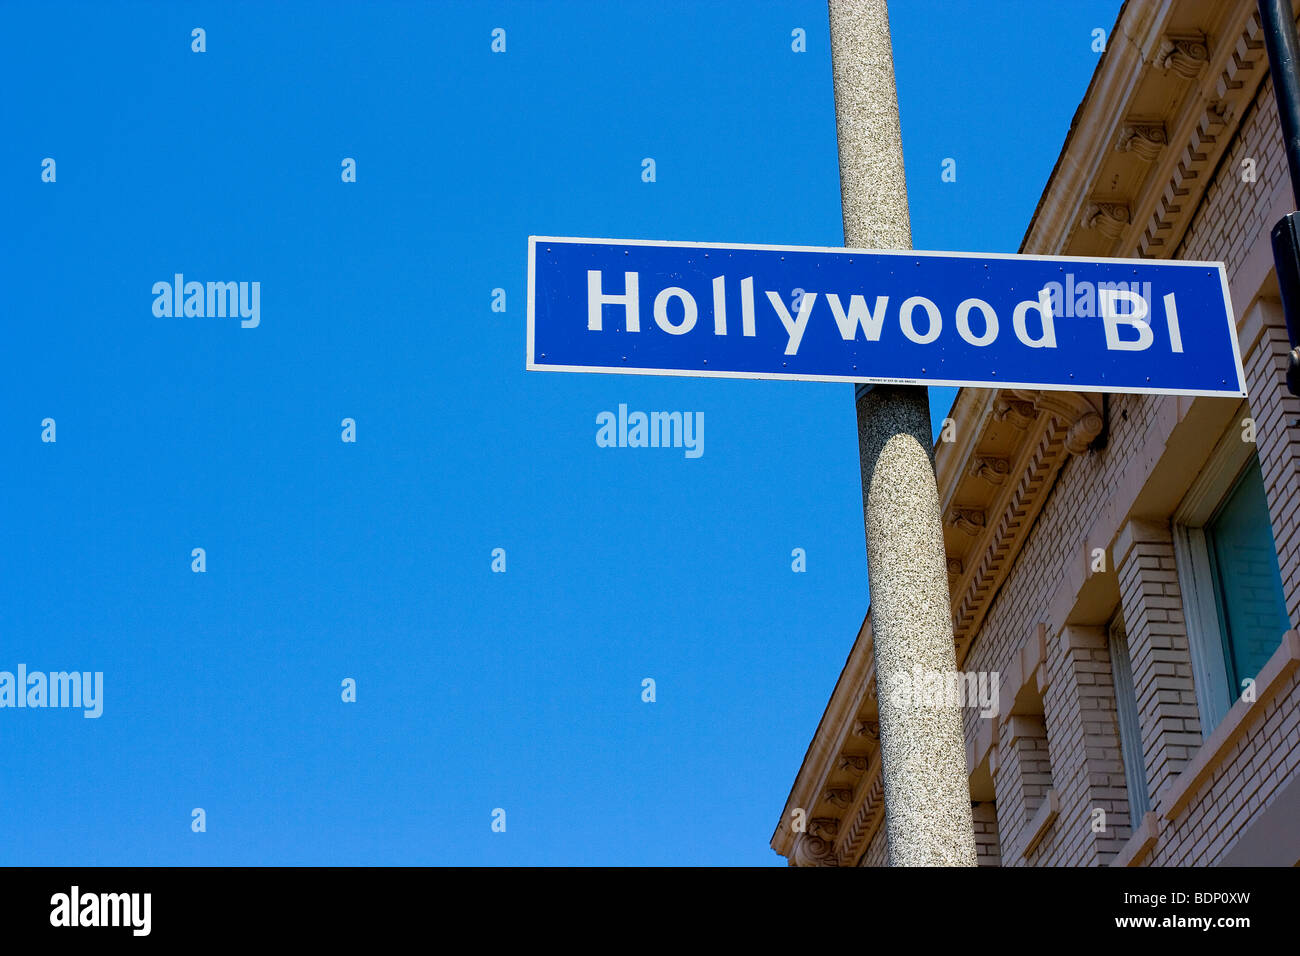 Hollywood Blvd - Los Angeles Stock Photo